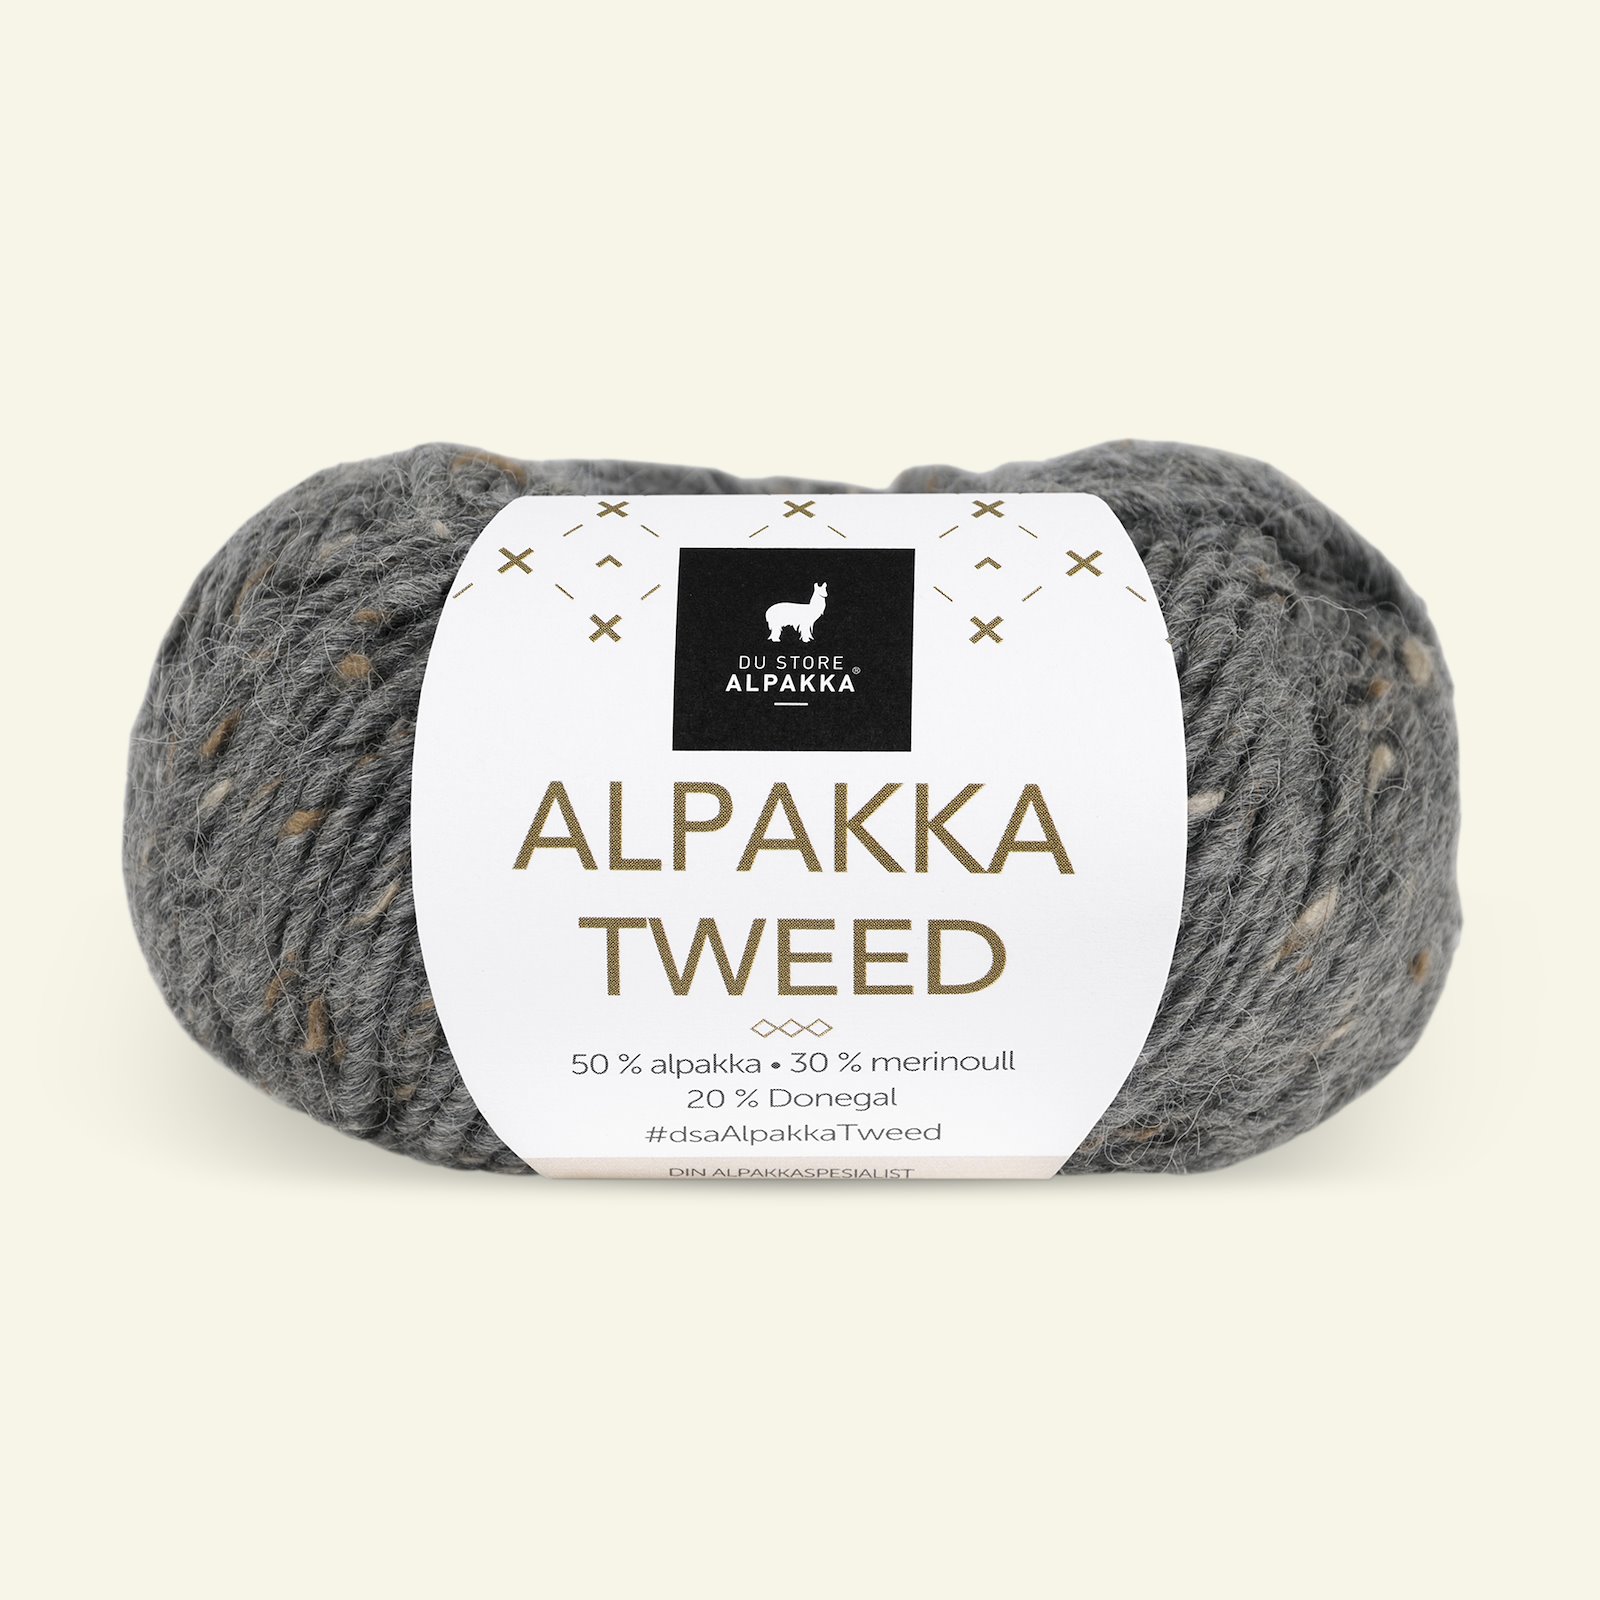 Du Store Alpakka, tweed Wolle "Alpakka Tweed", dunkelgrau (102) 90000521_pack